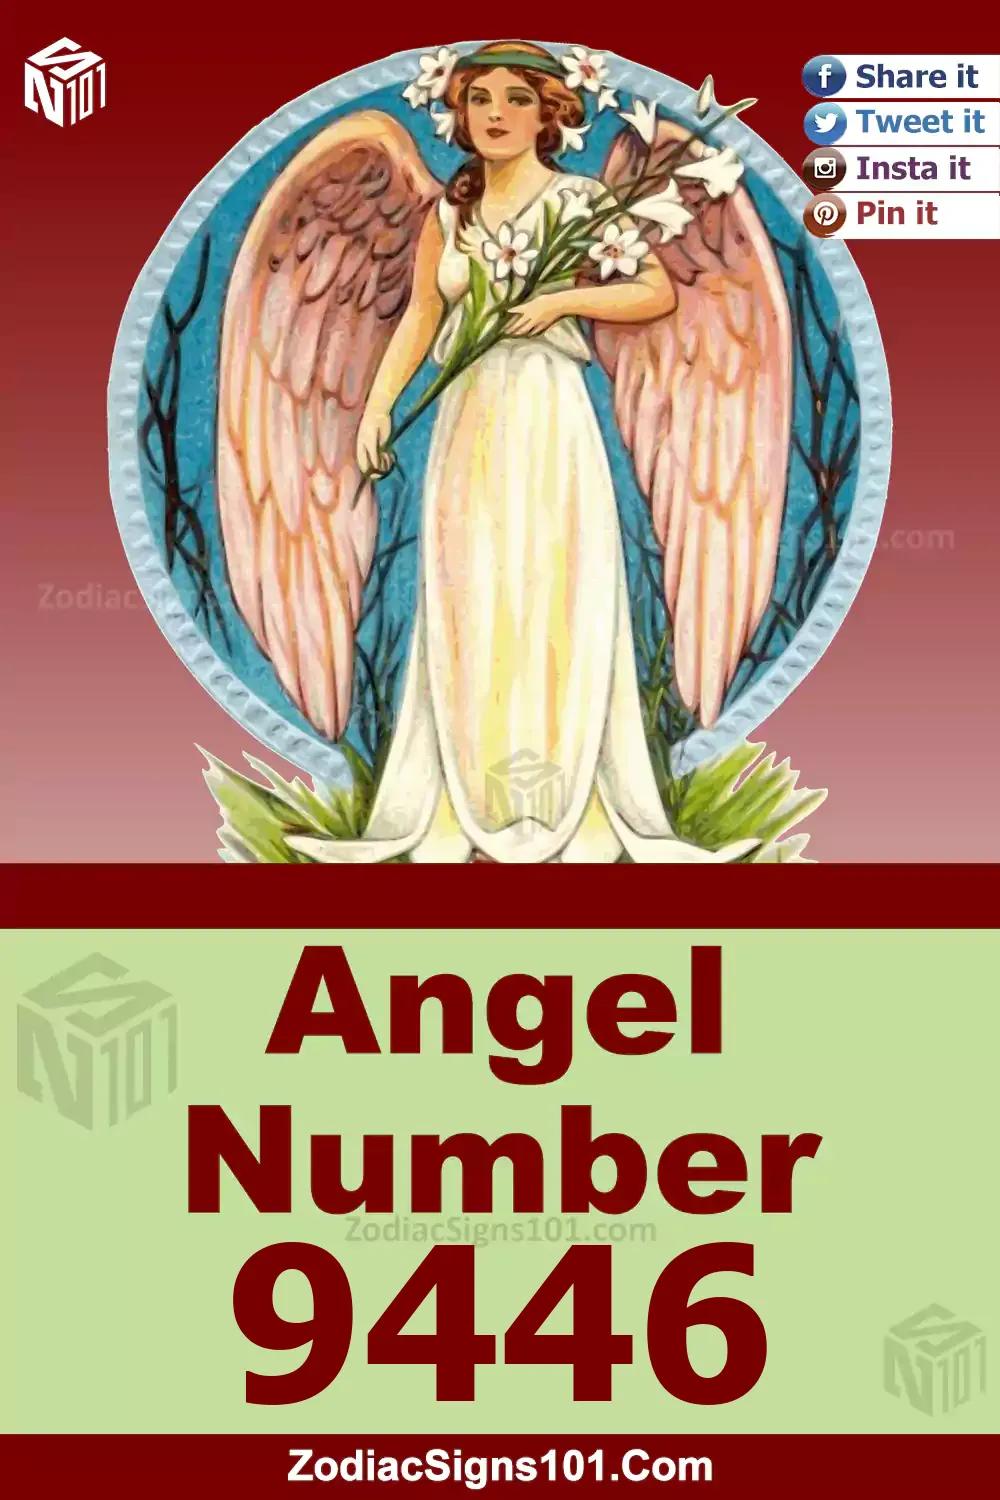 9446-Angel-Number-Meaning.jpg